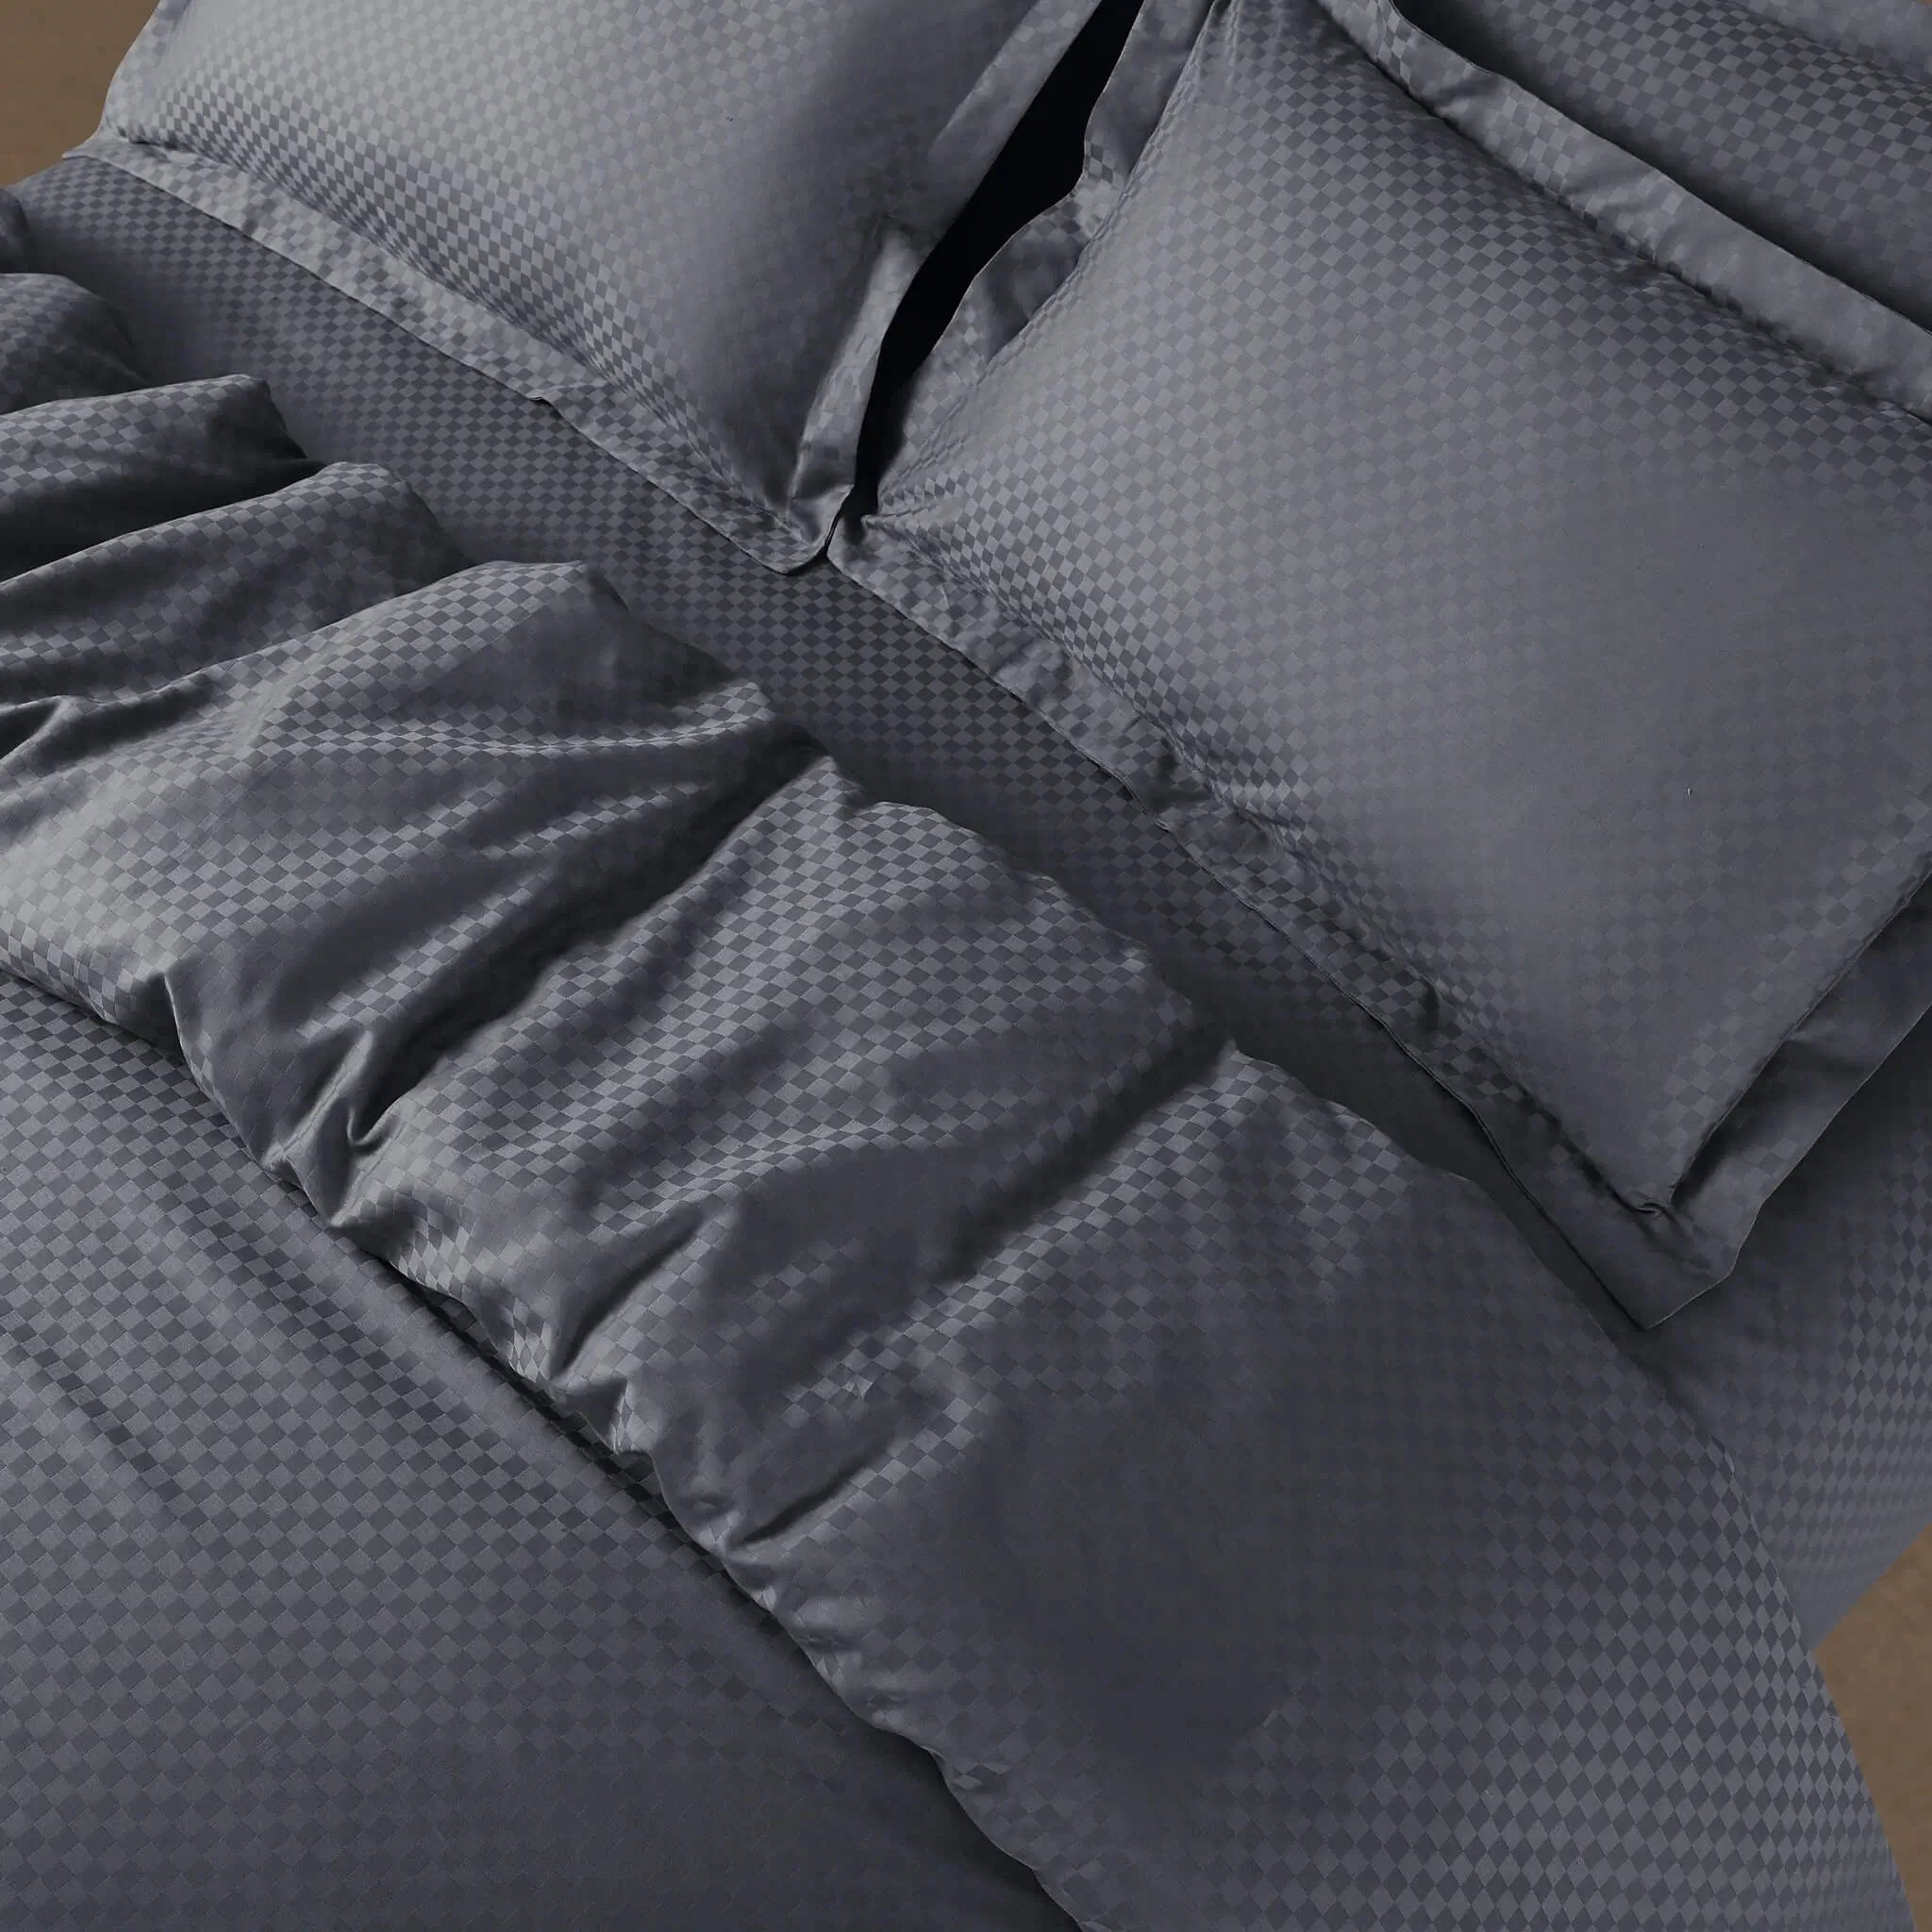 Malako Lyon Jacquard Grey Checks 450 TC 100% Cotton Double Bed Duvet Cover - MALAKO